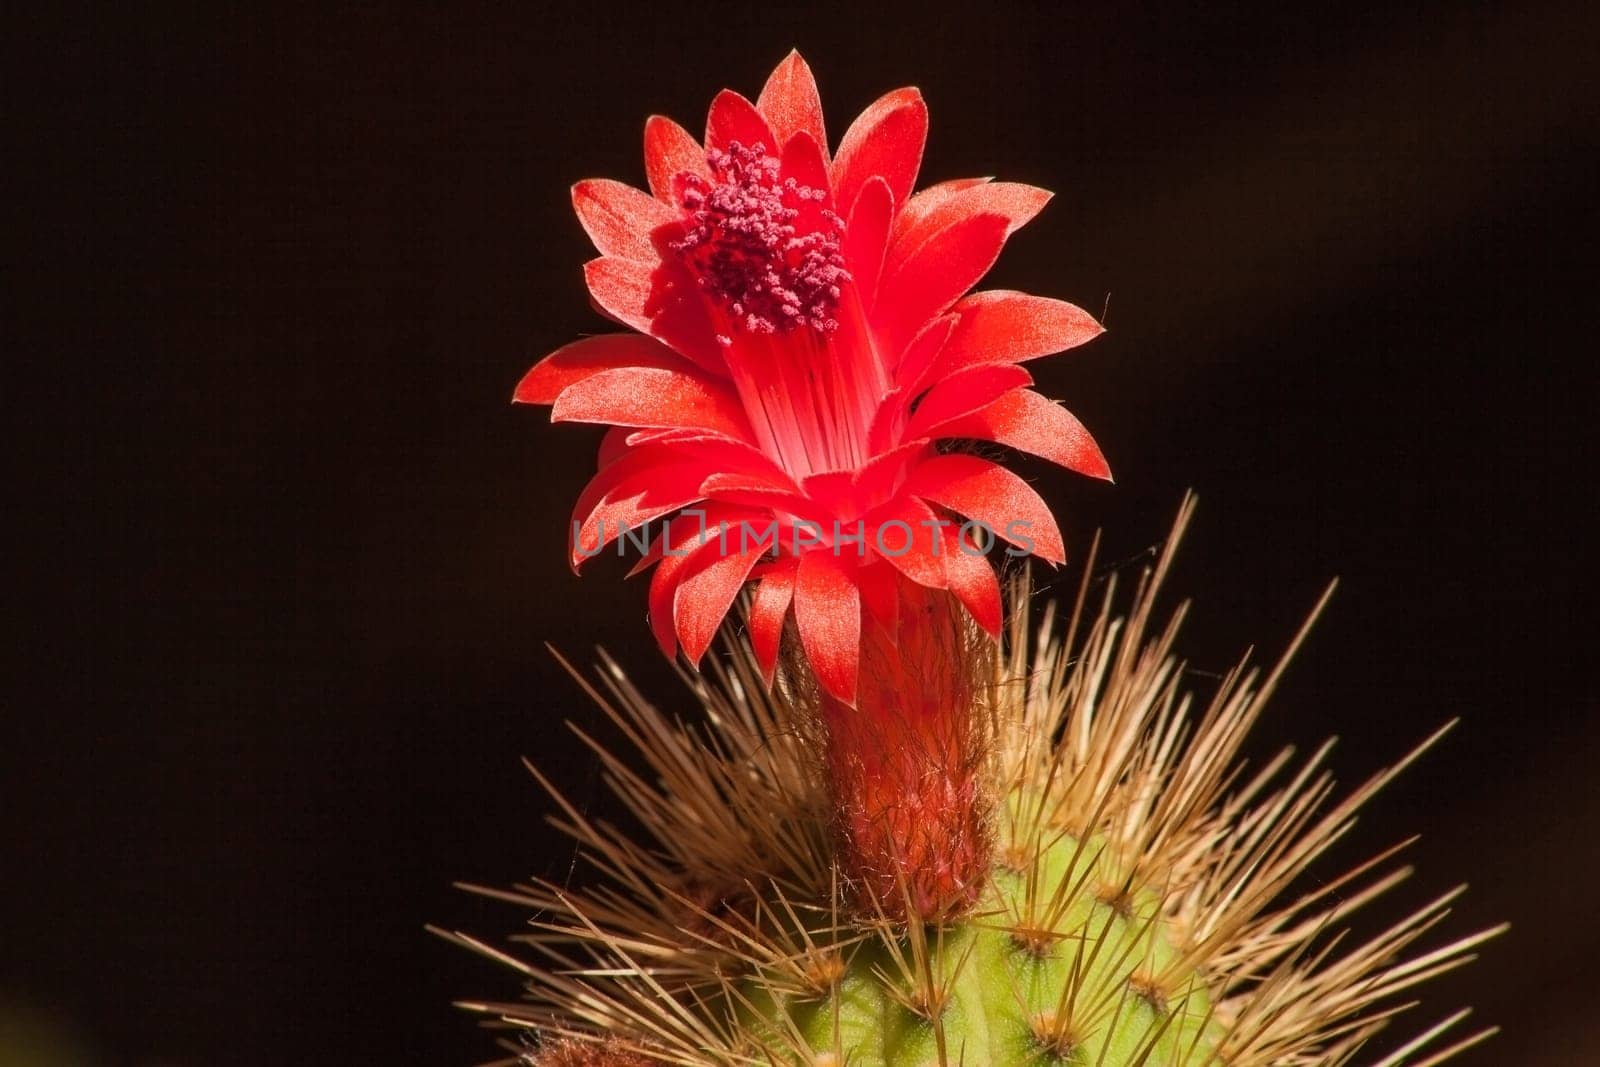 Cleistocactus samaipatanus flower 8803 by kobus_peche